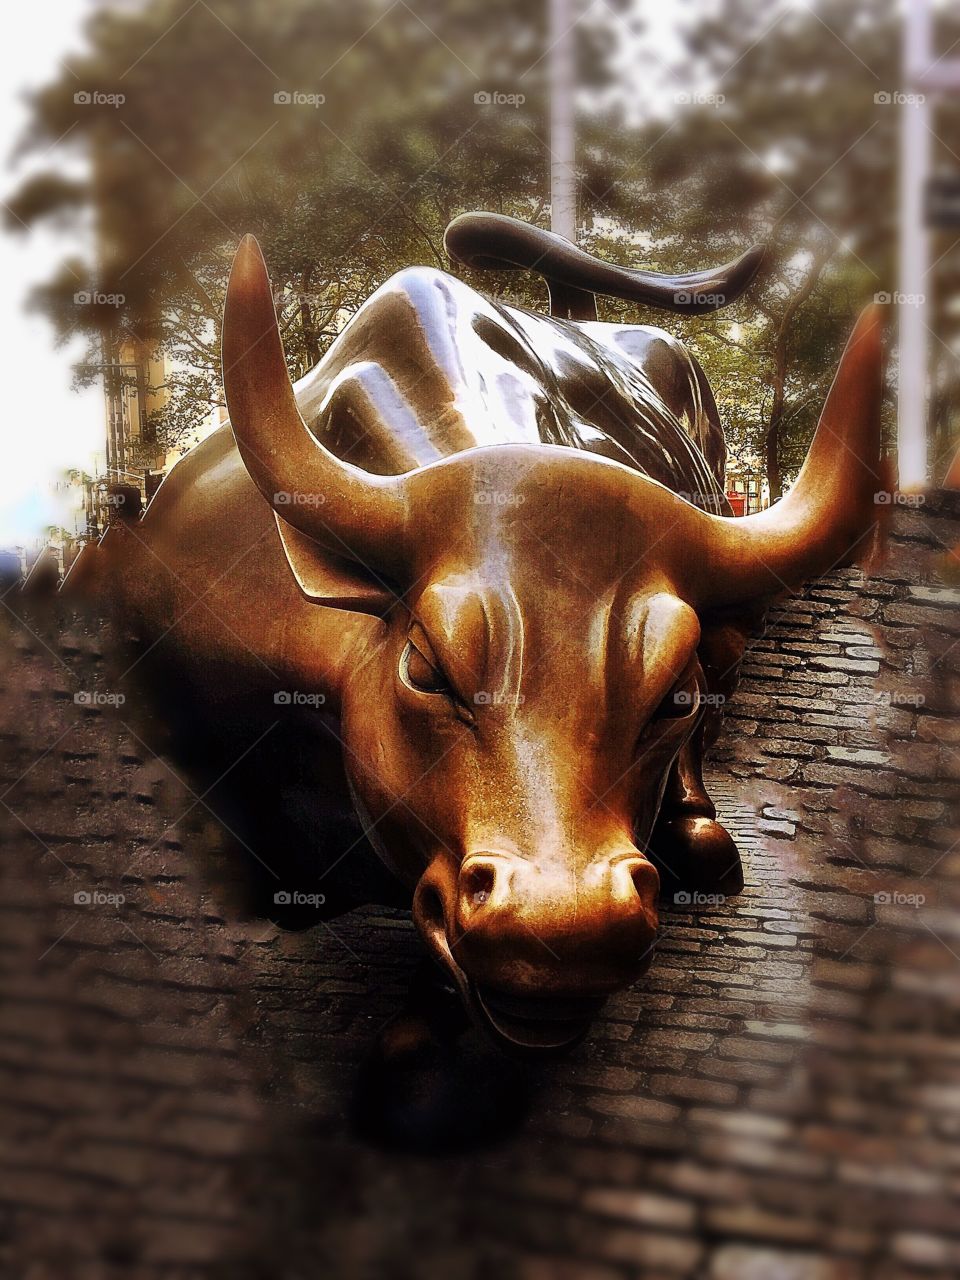 Charging Bull - Financial District, Manhattan, New York City 